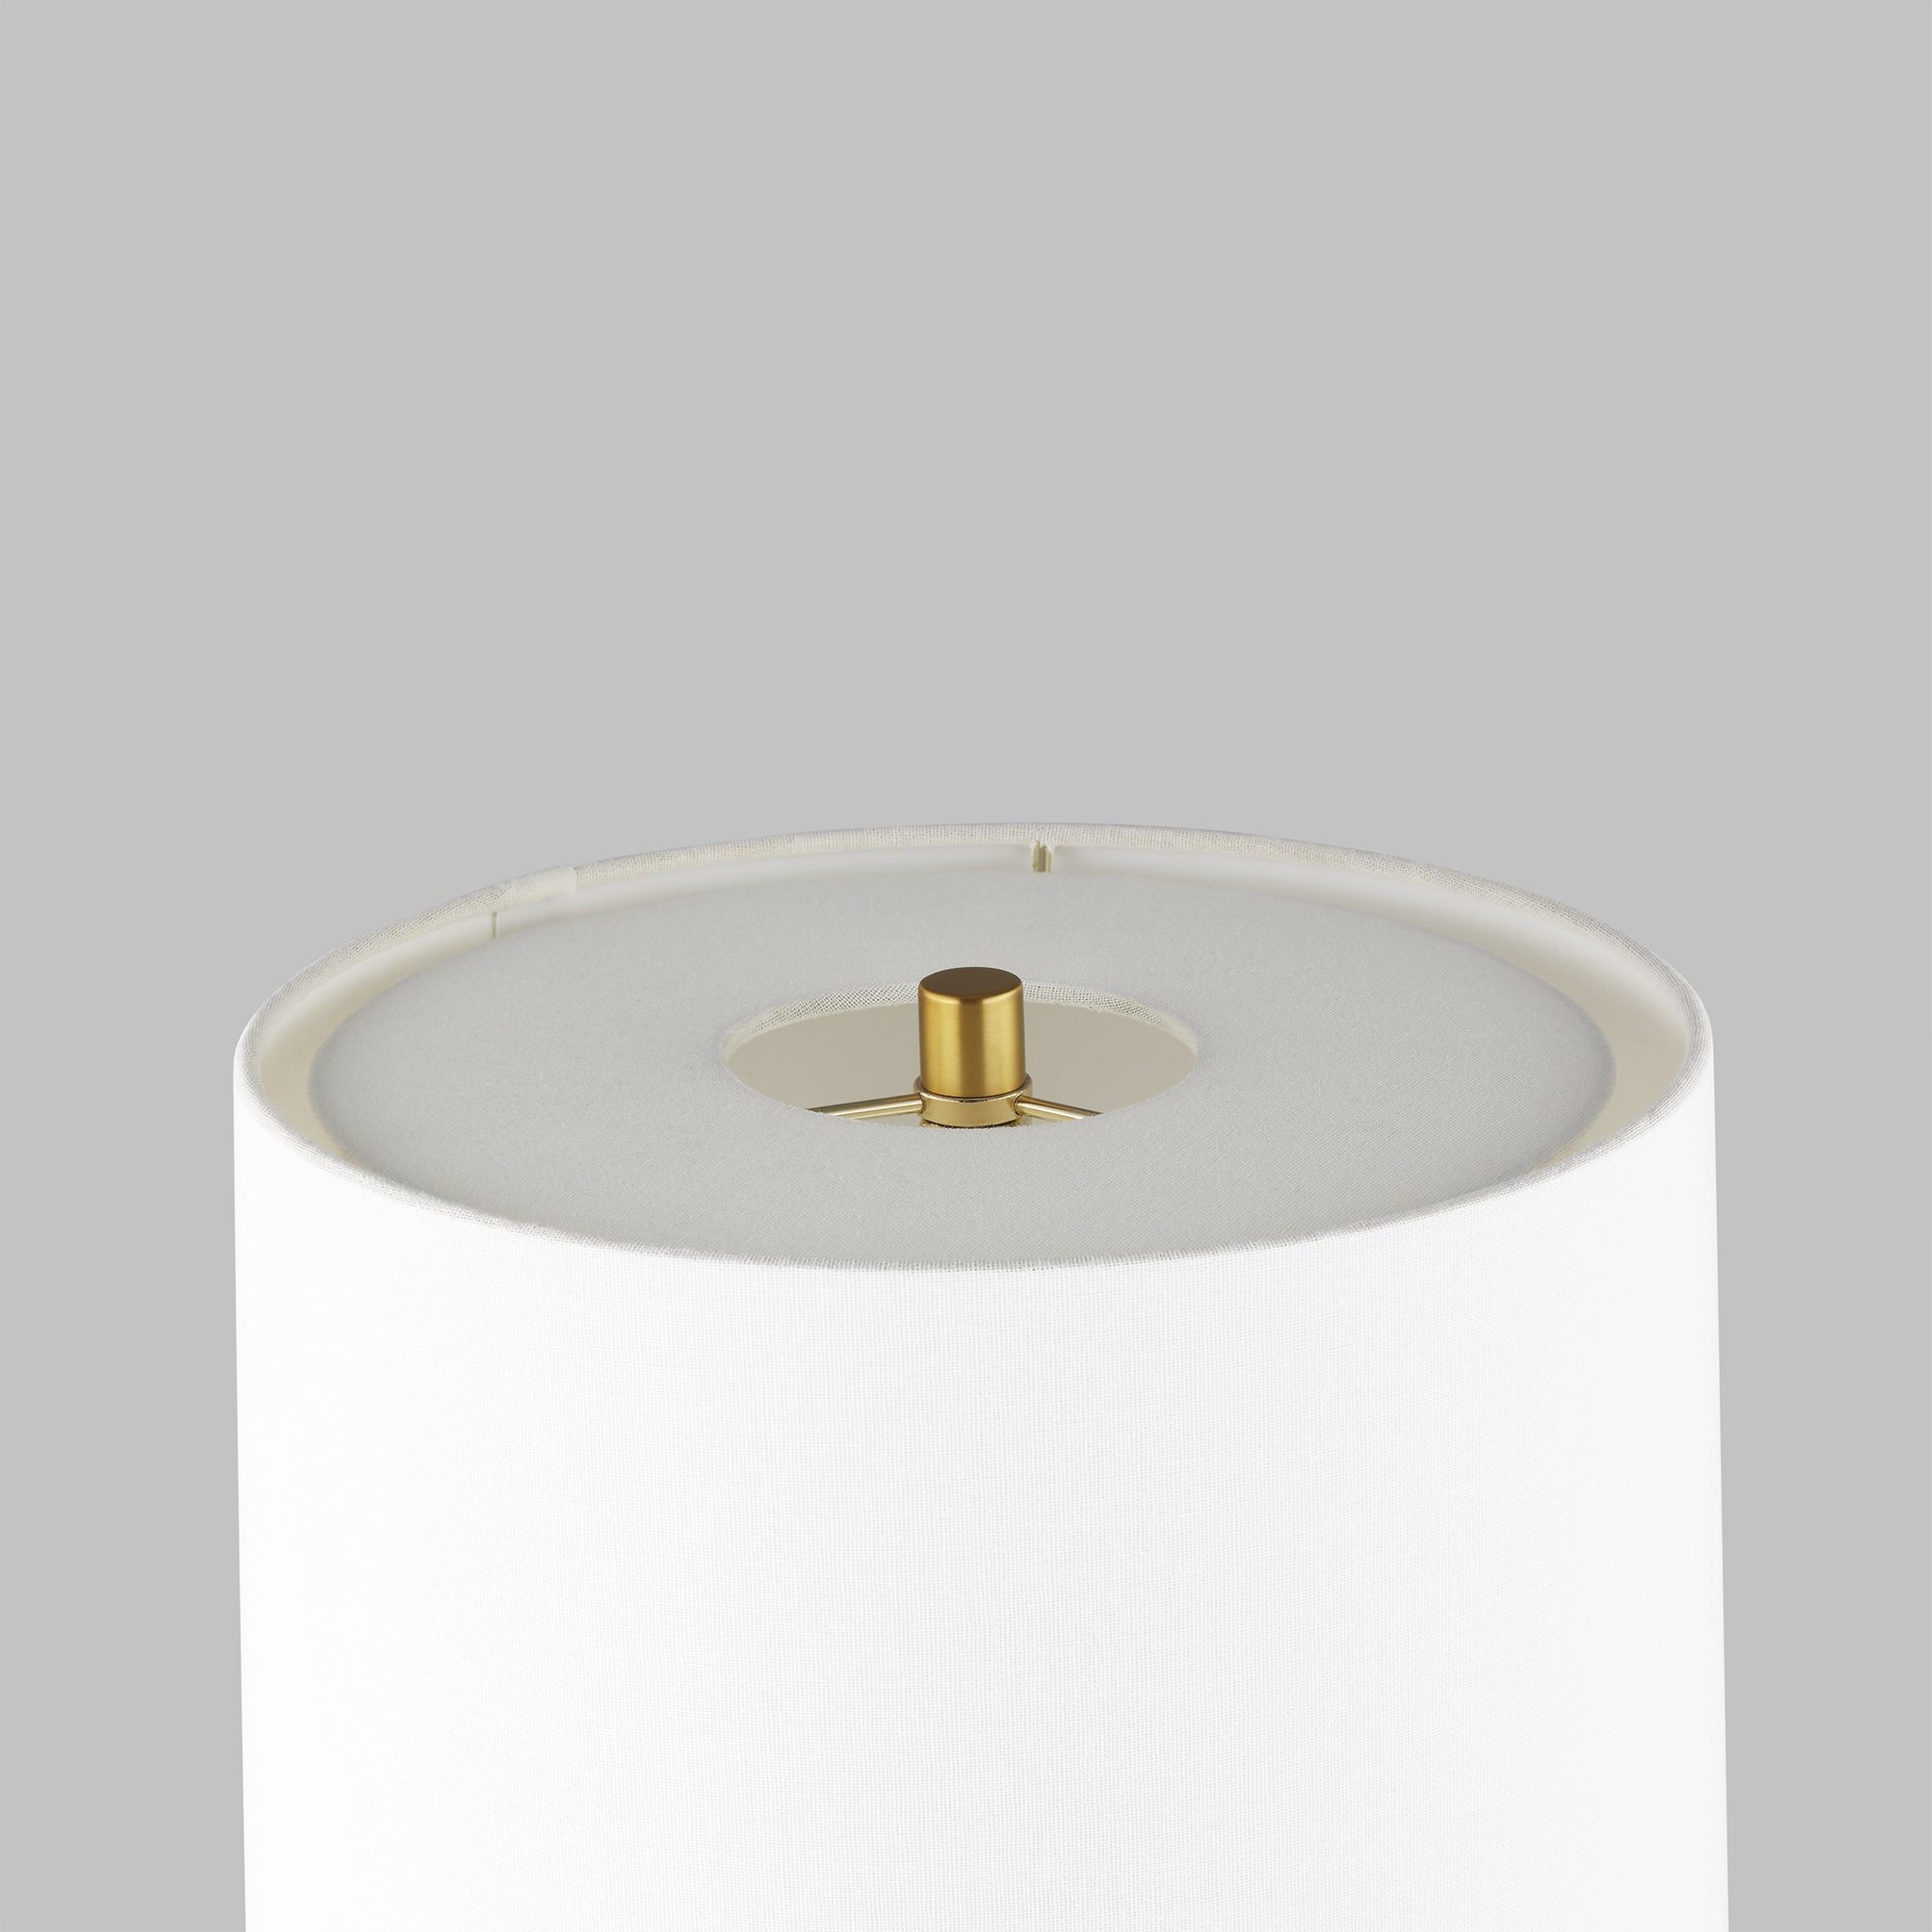 Morada Table Lamp Arctic White / Burnished Brass